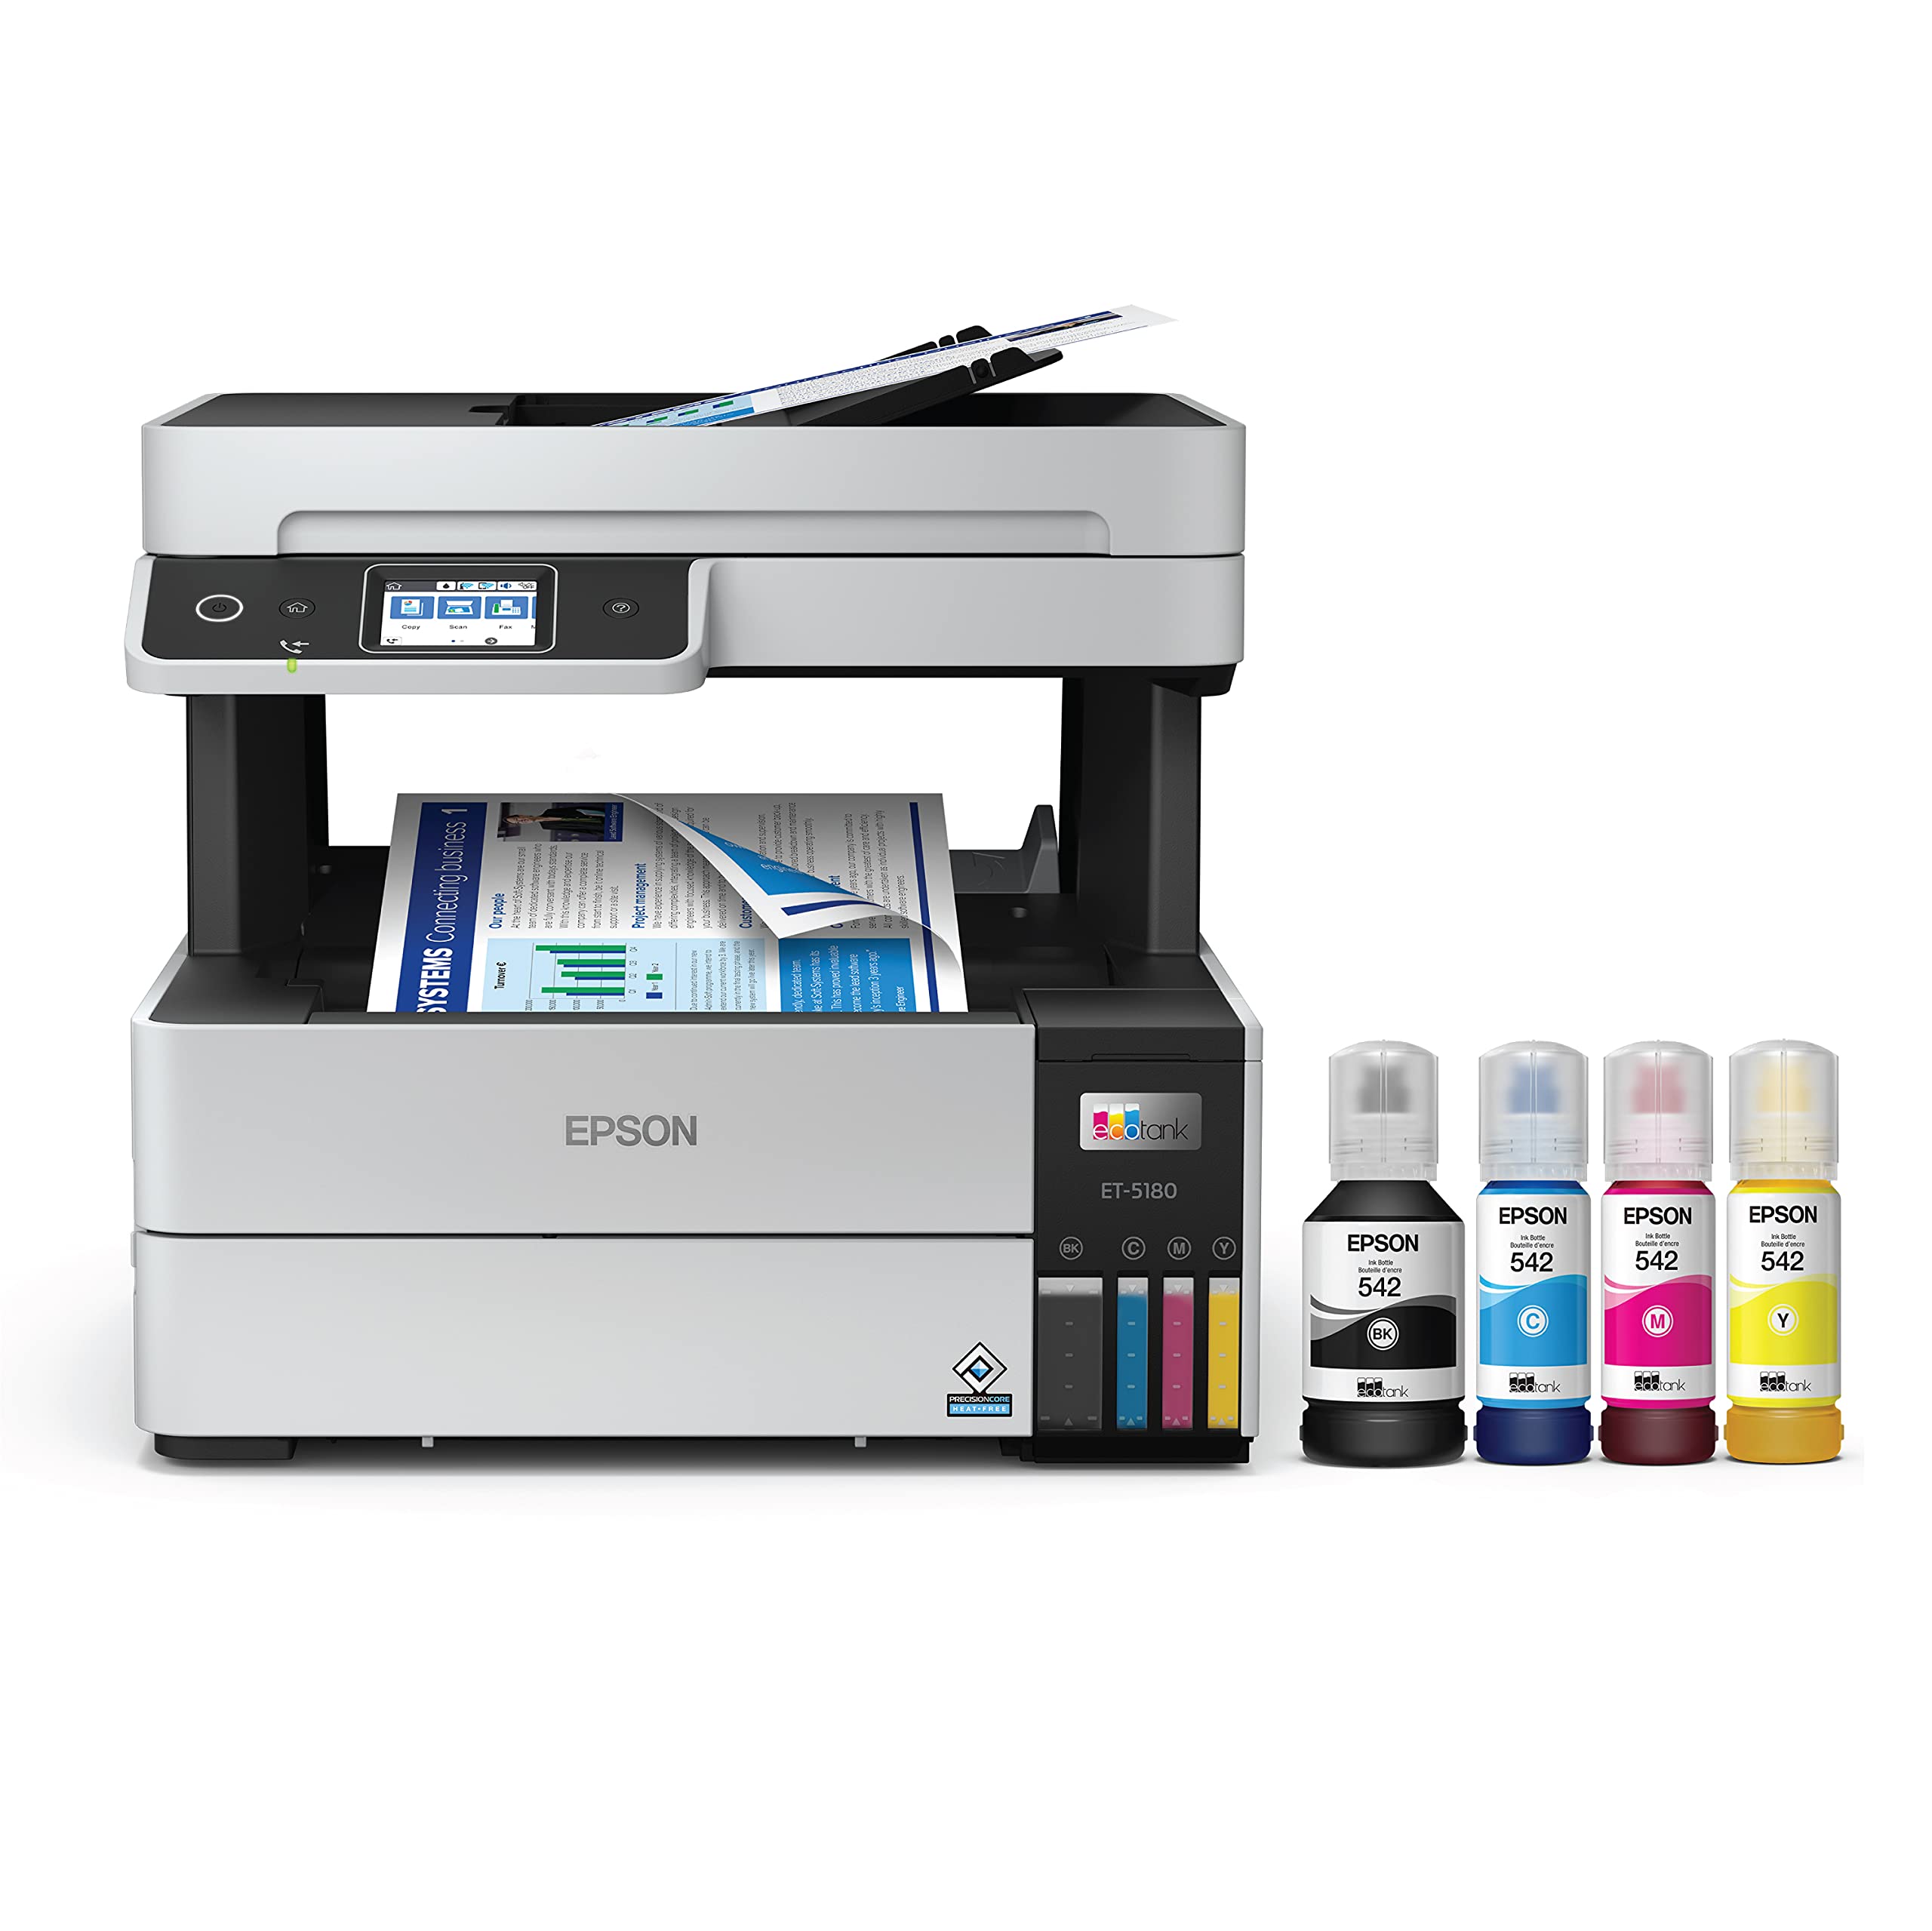 Epson EcoTank Pro ET-5180 Wireless Color All-in-One Supertank Printer with Scanner, Copier, Fax Plus Auto Document Feeder ...